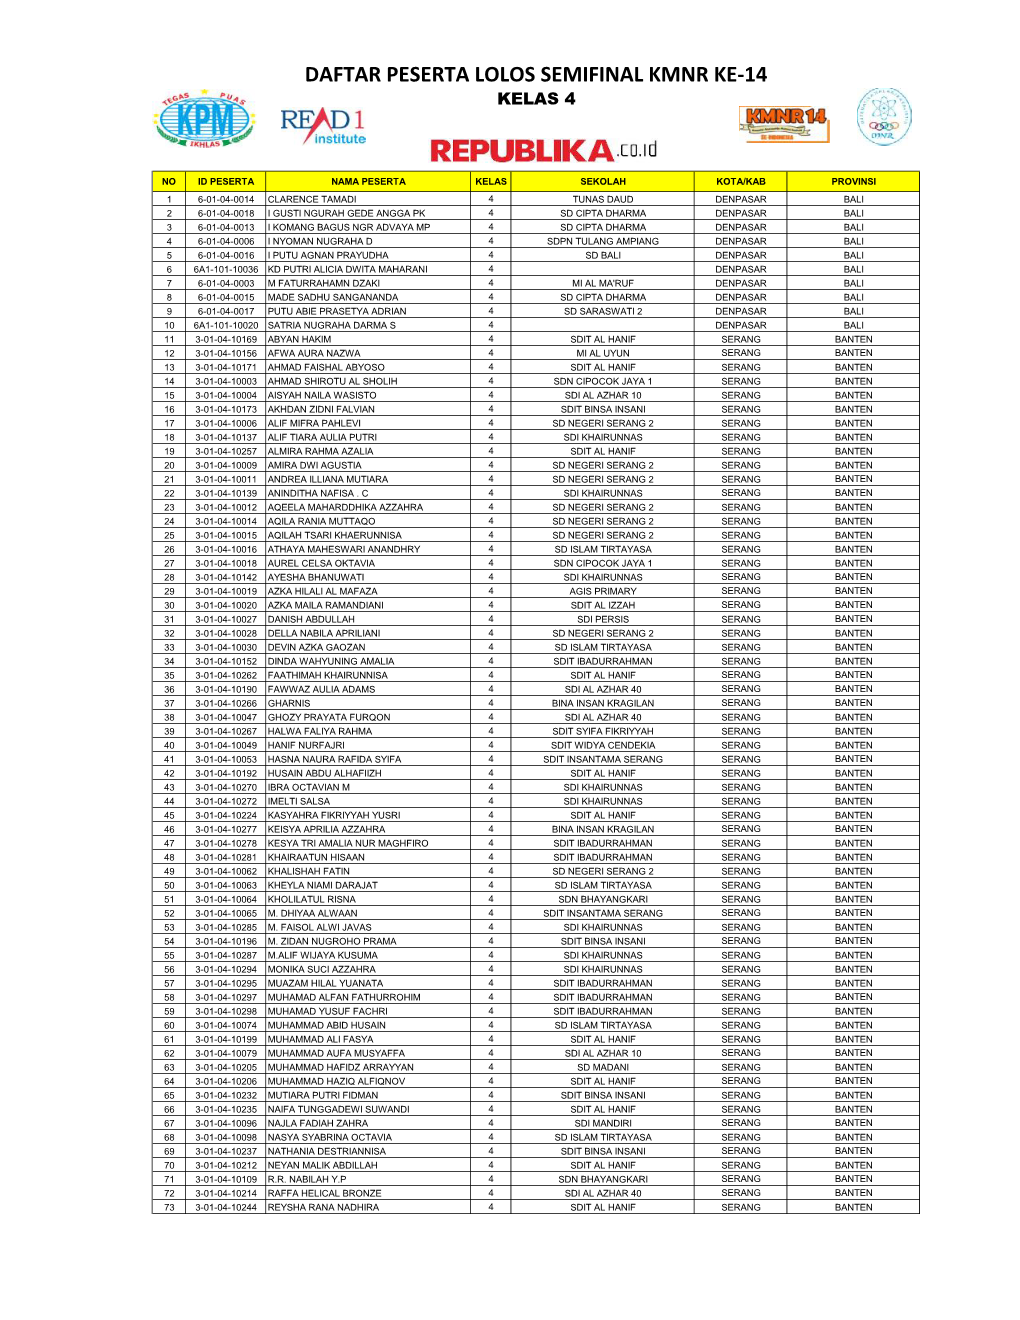 Daftar Peserta Lolos Semifinal Kmnr Ke-14 Kelas 4